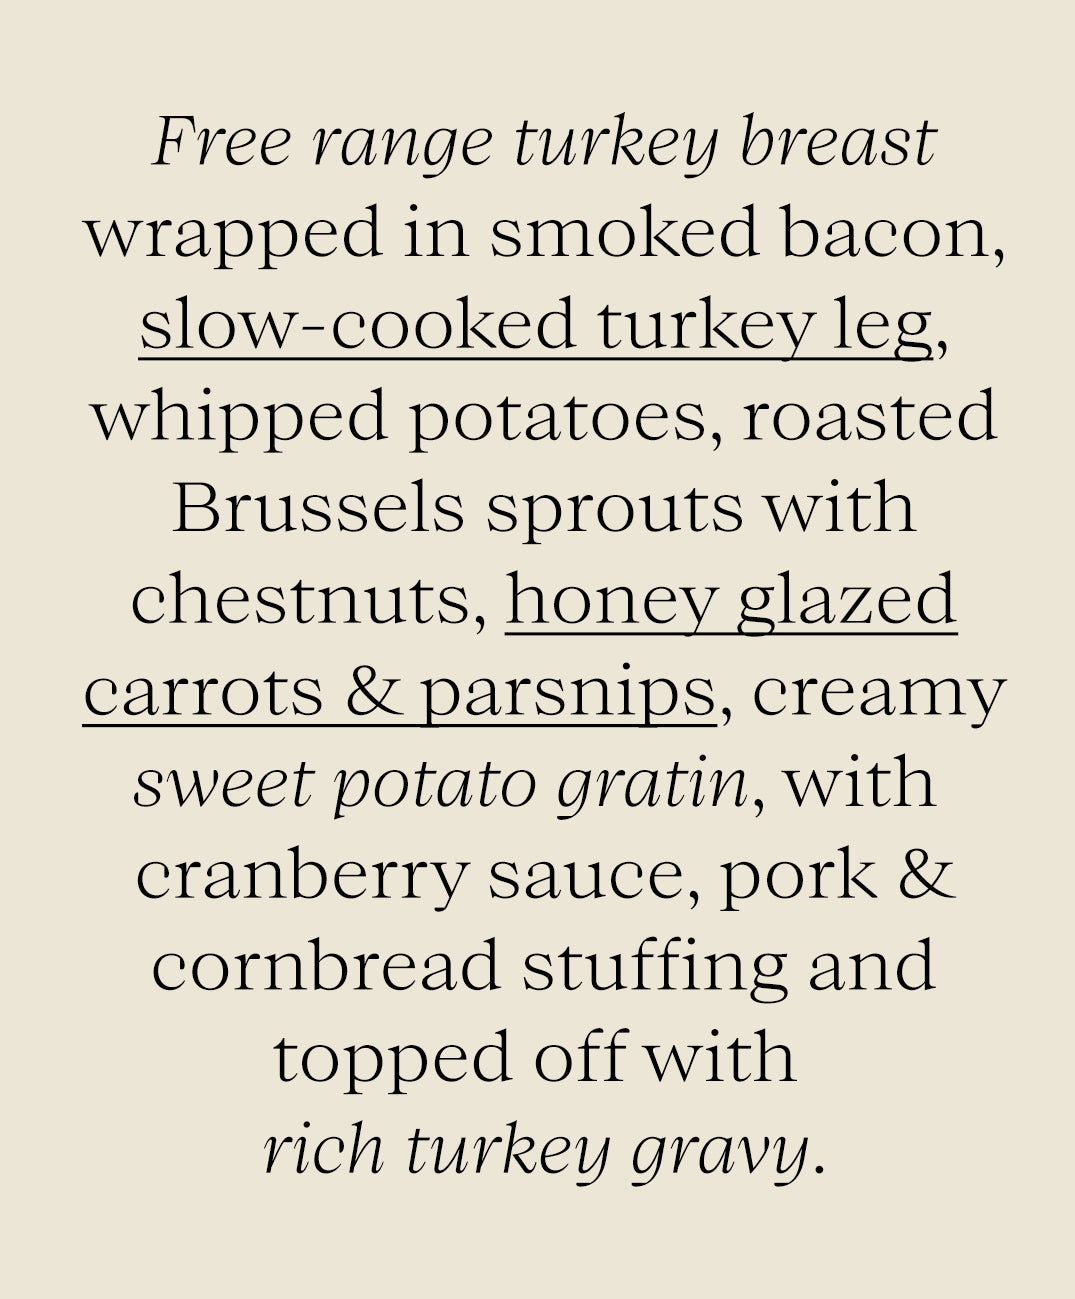 My Thanksgiving Hero - A Feast of Roast Turkey, Sweet Potato Gratin and more